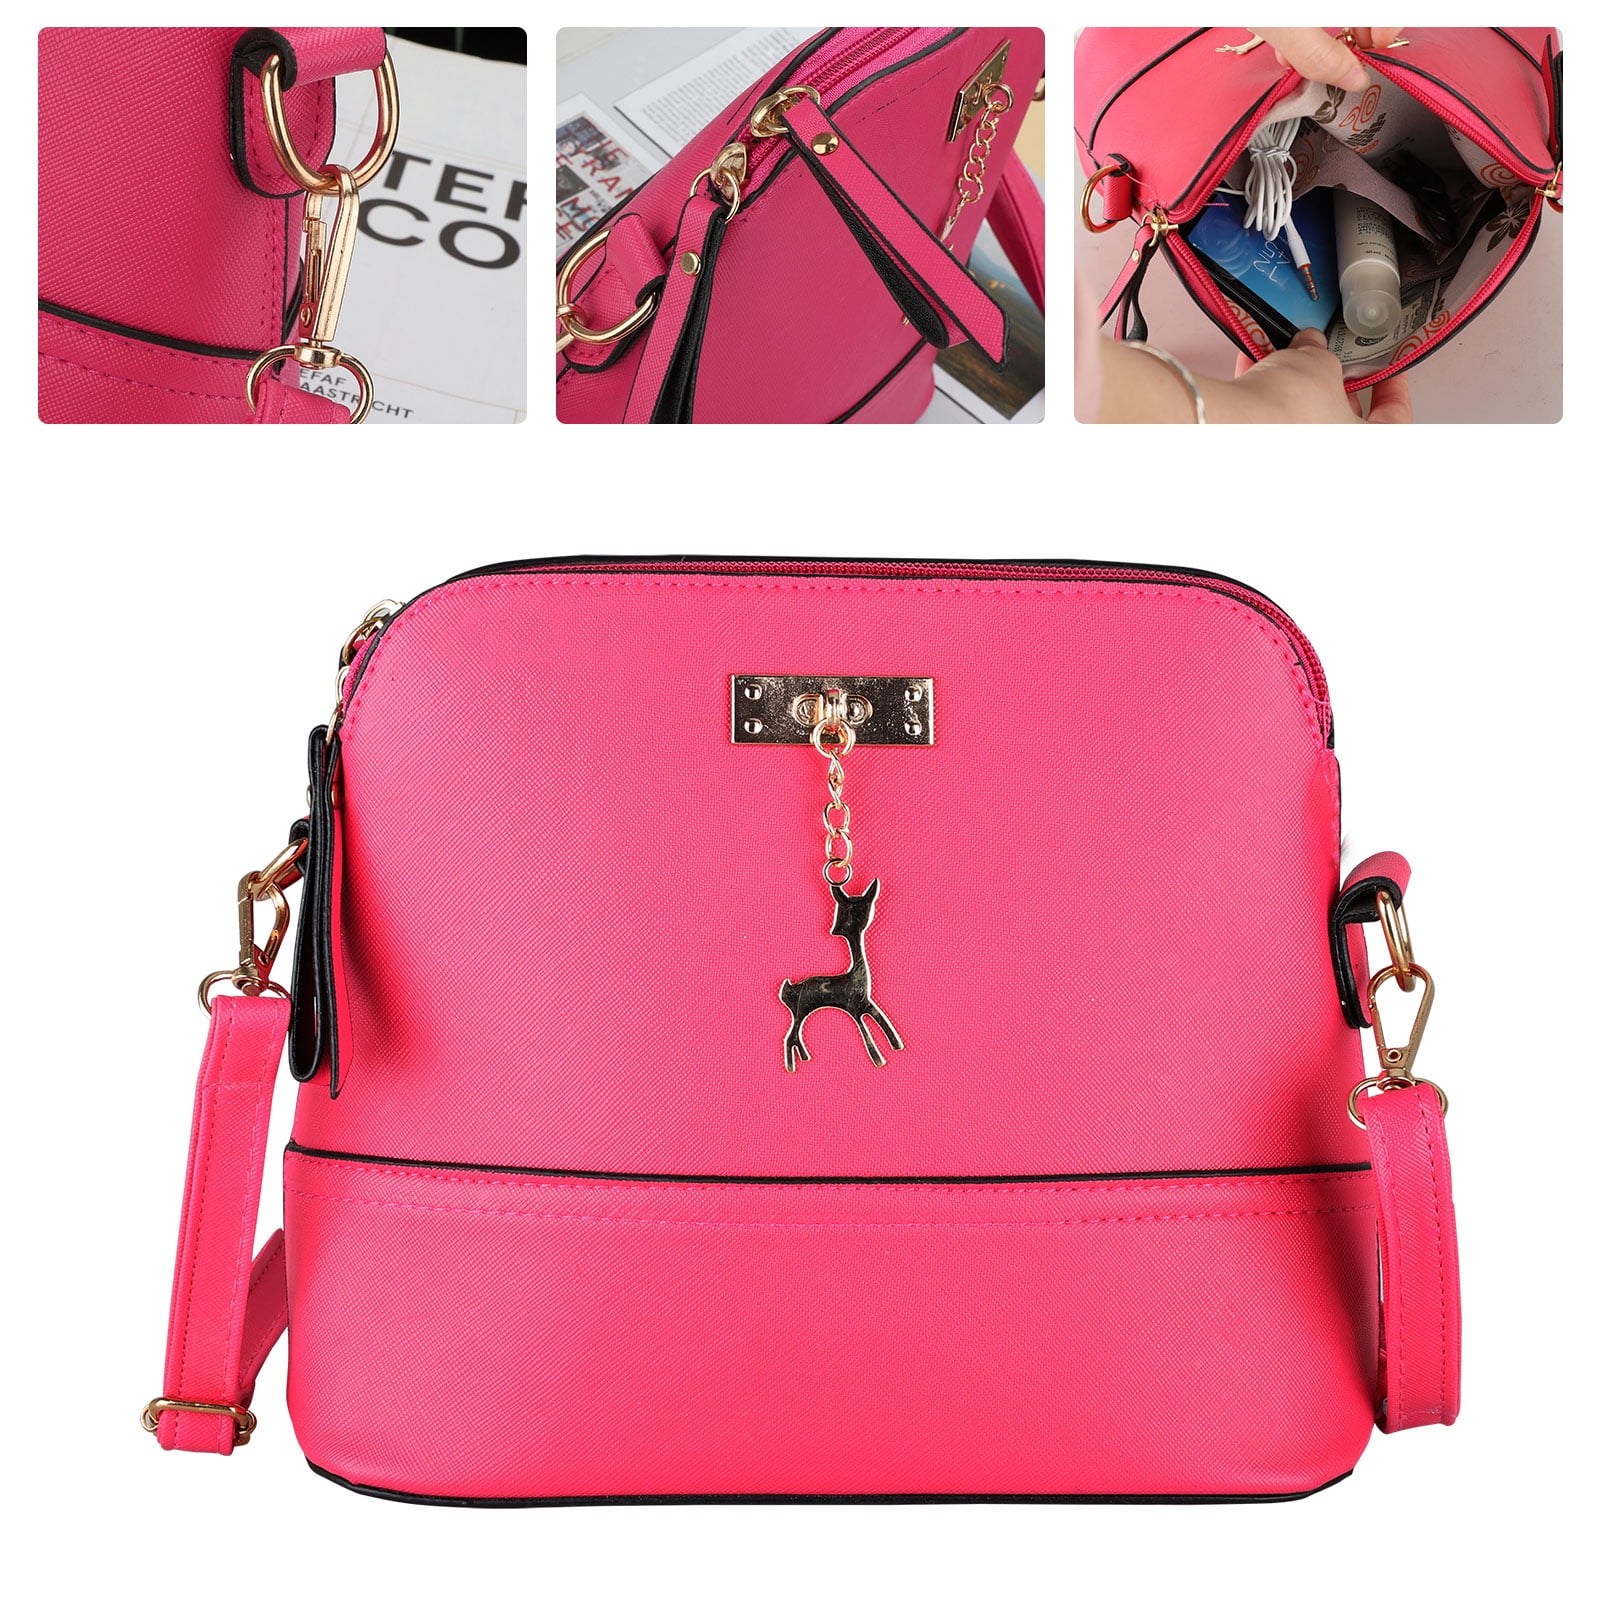 EEEkit - Women Crossbody Shoulder Bags Small Adjustable Strap Handbags,Elegant Lightweight ...